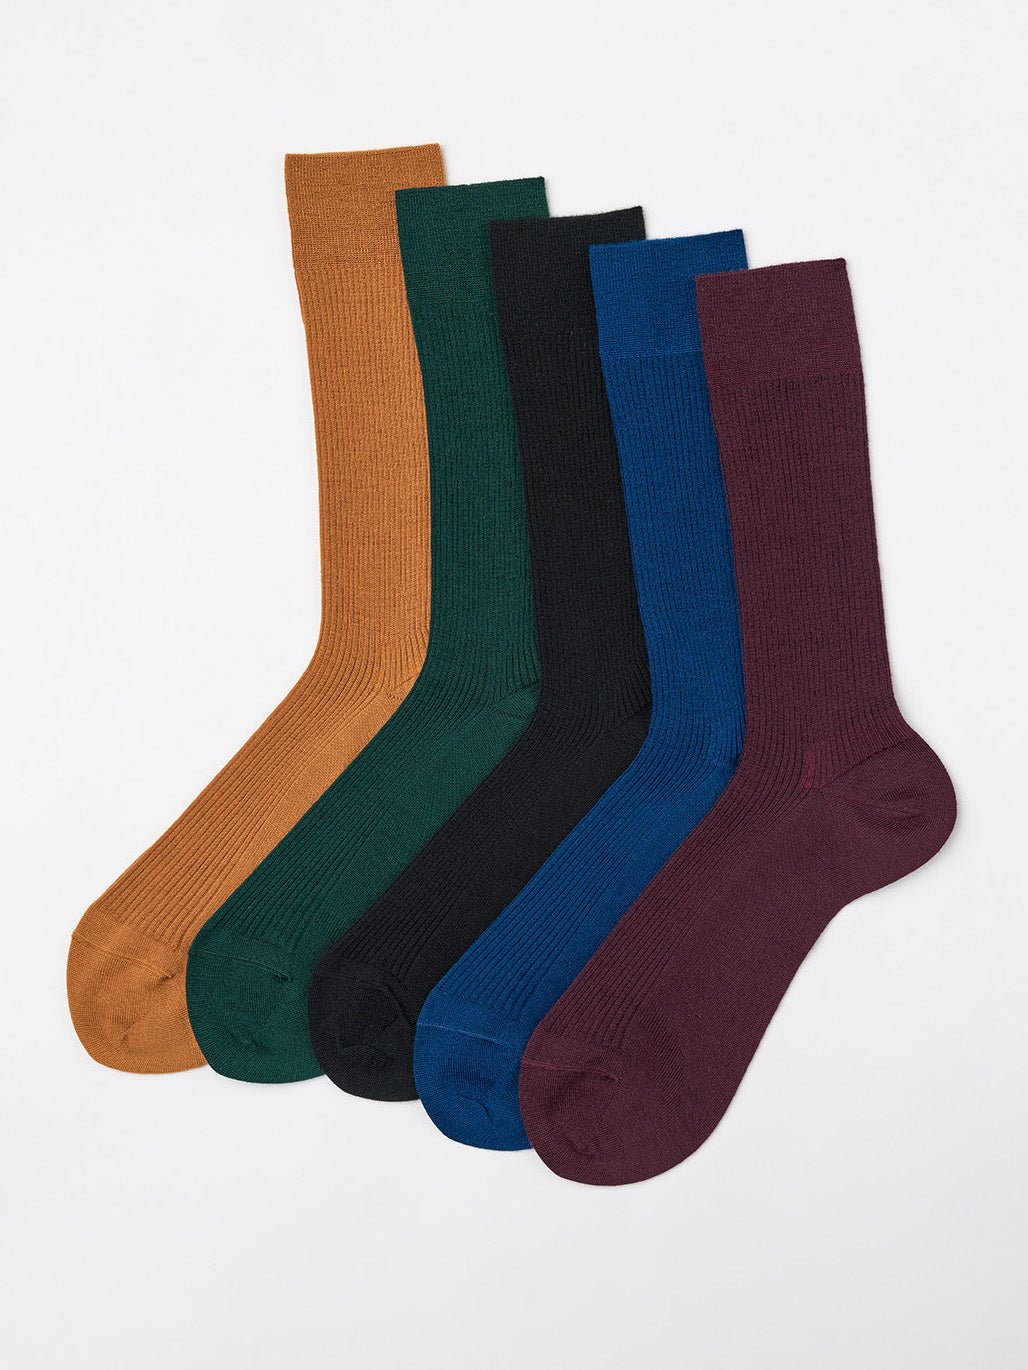 Classy Socks Merino Wool Black